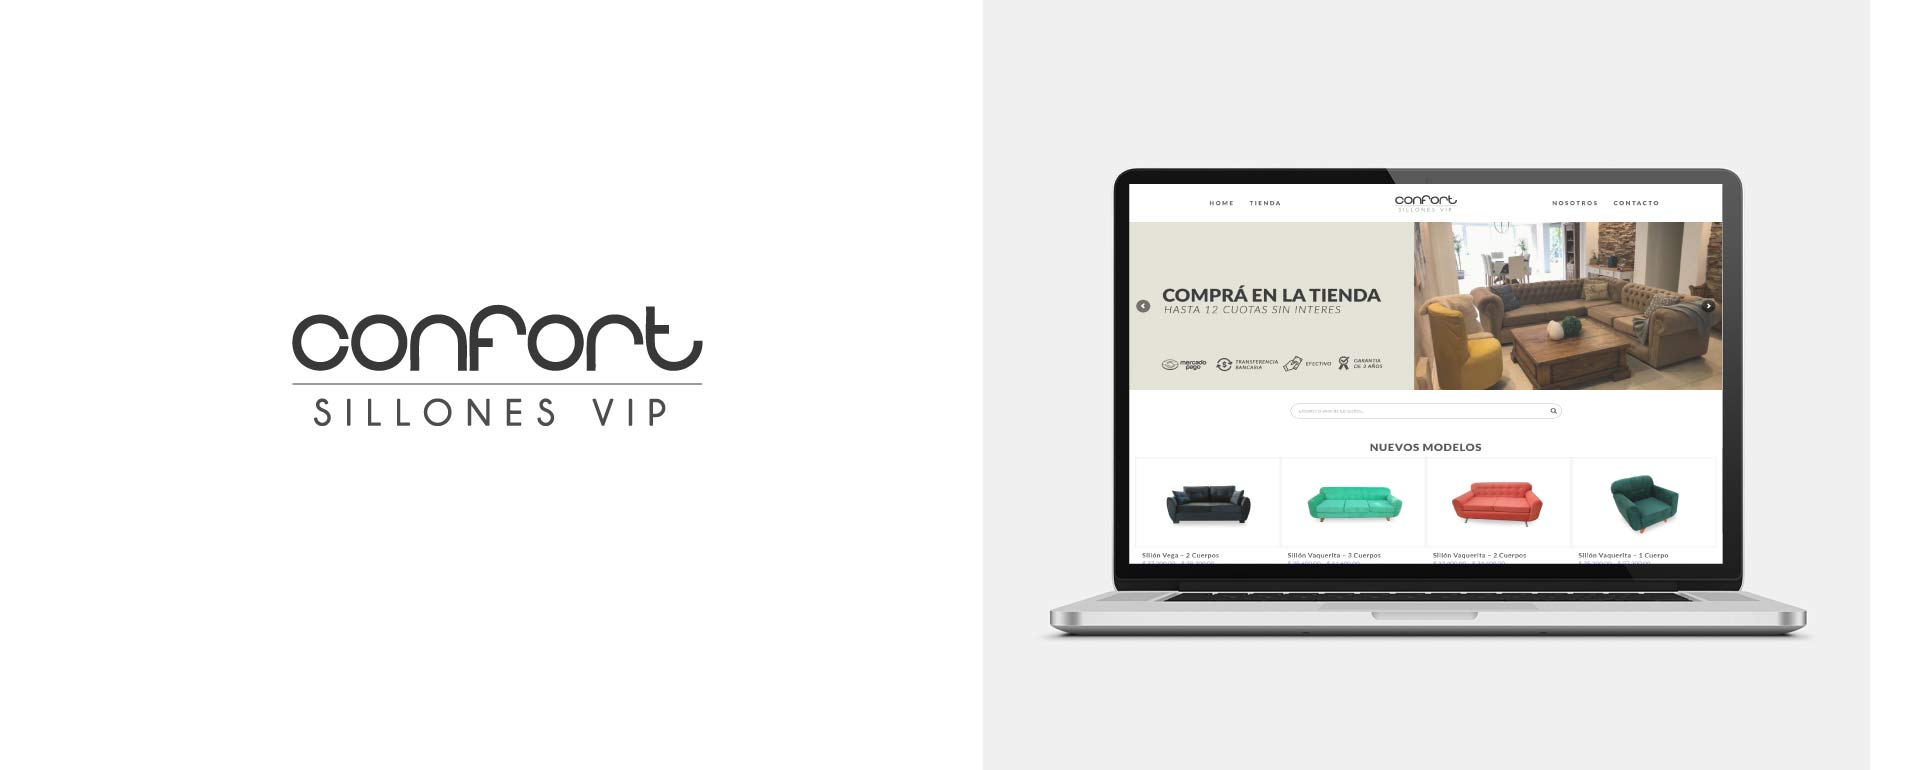 confort-vip-sillones-ecommerce-porfolio-vivalaweb